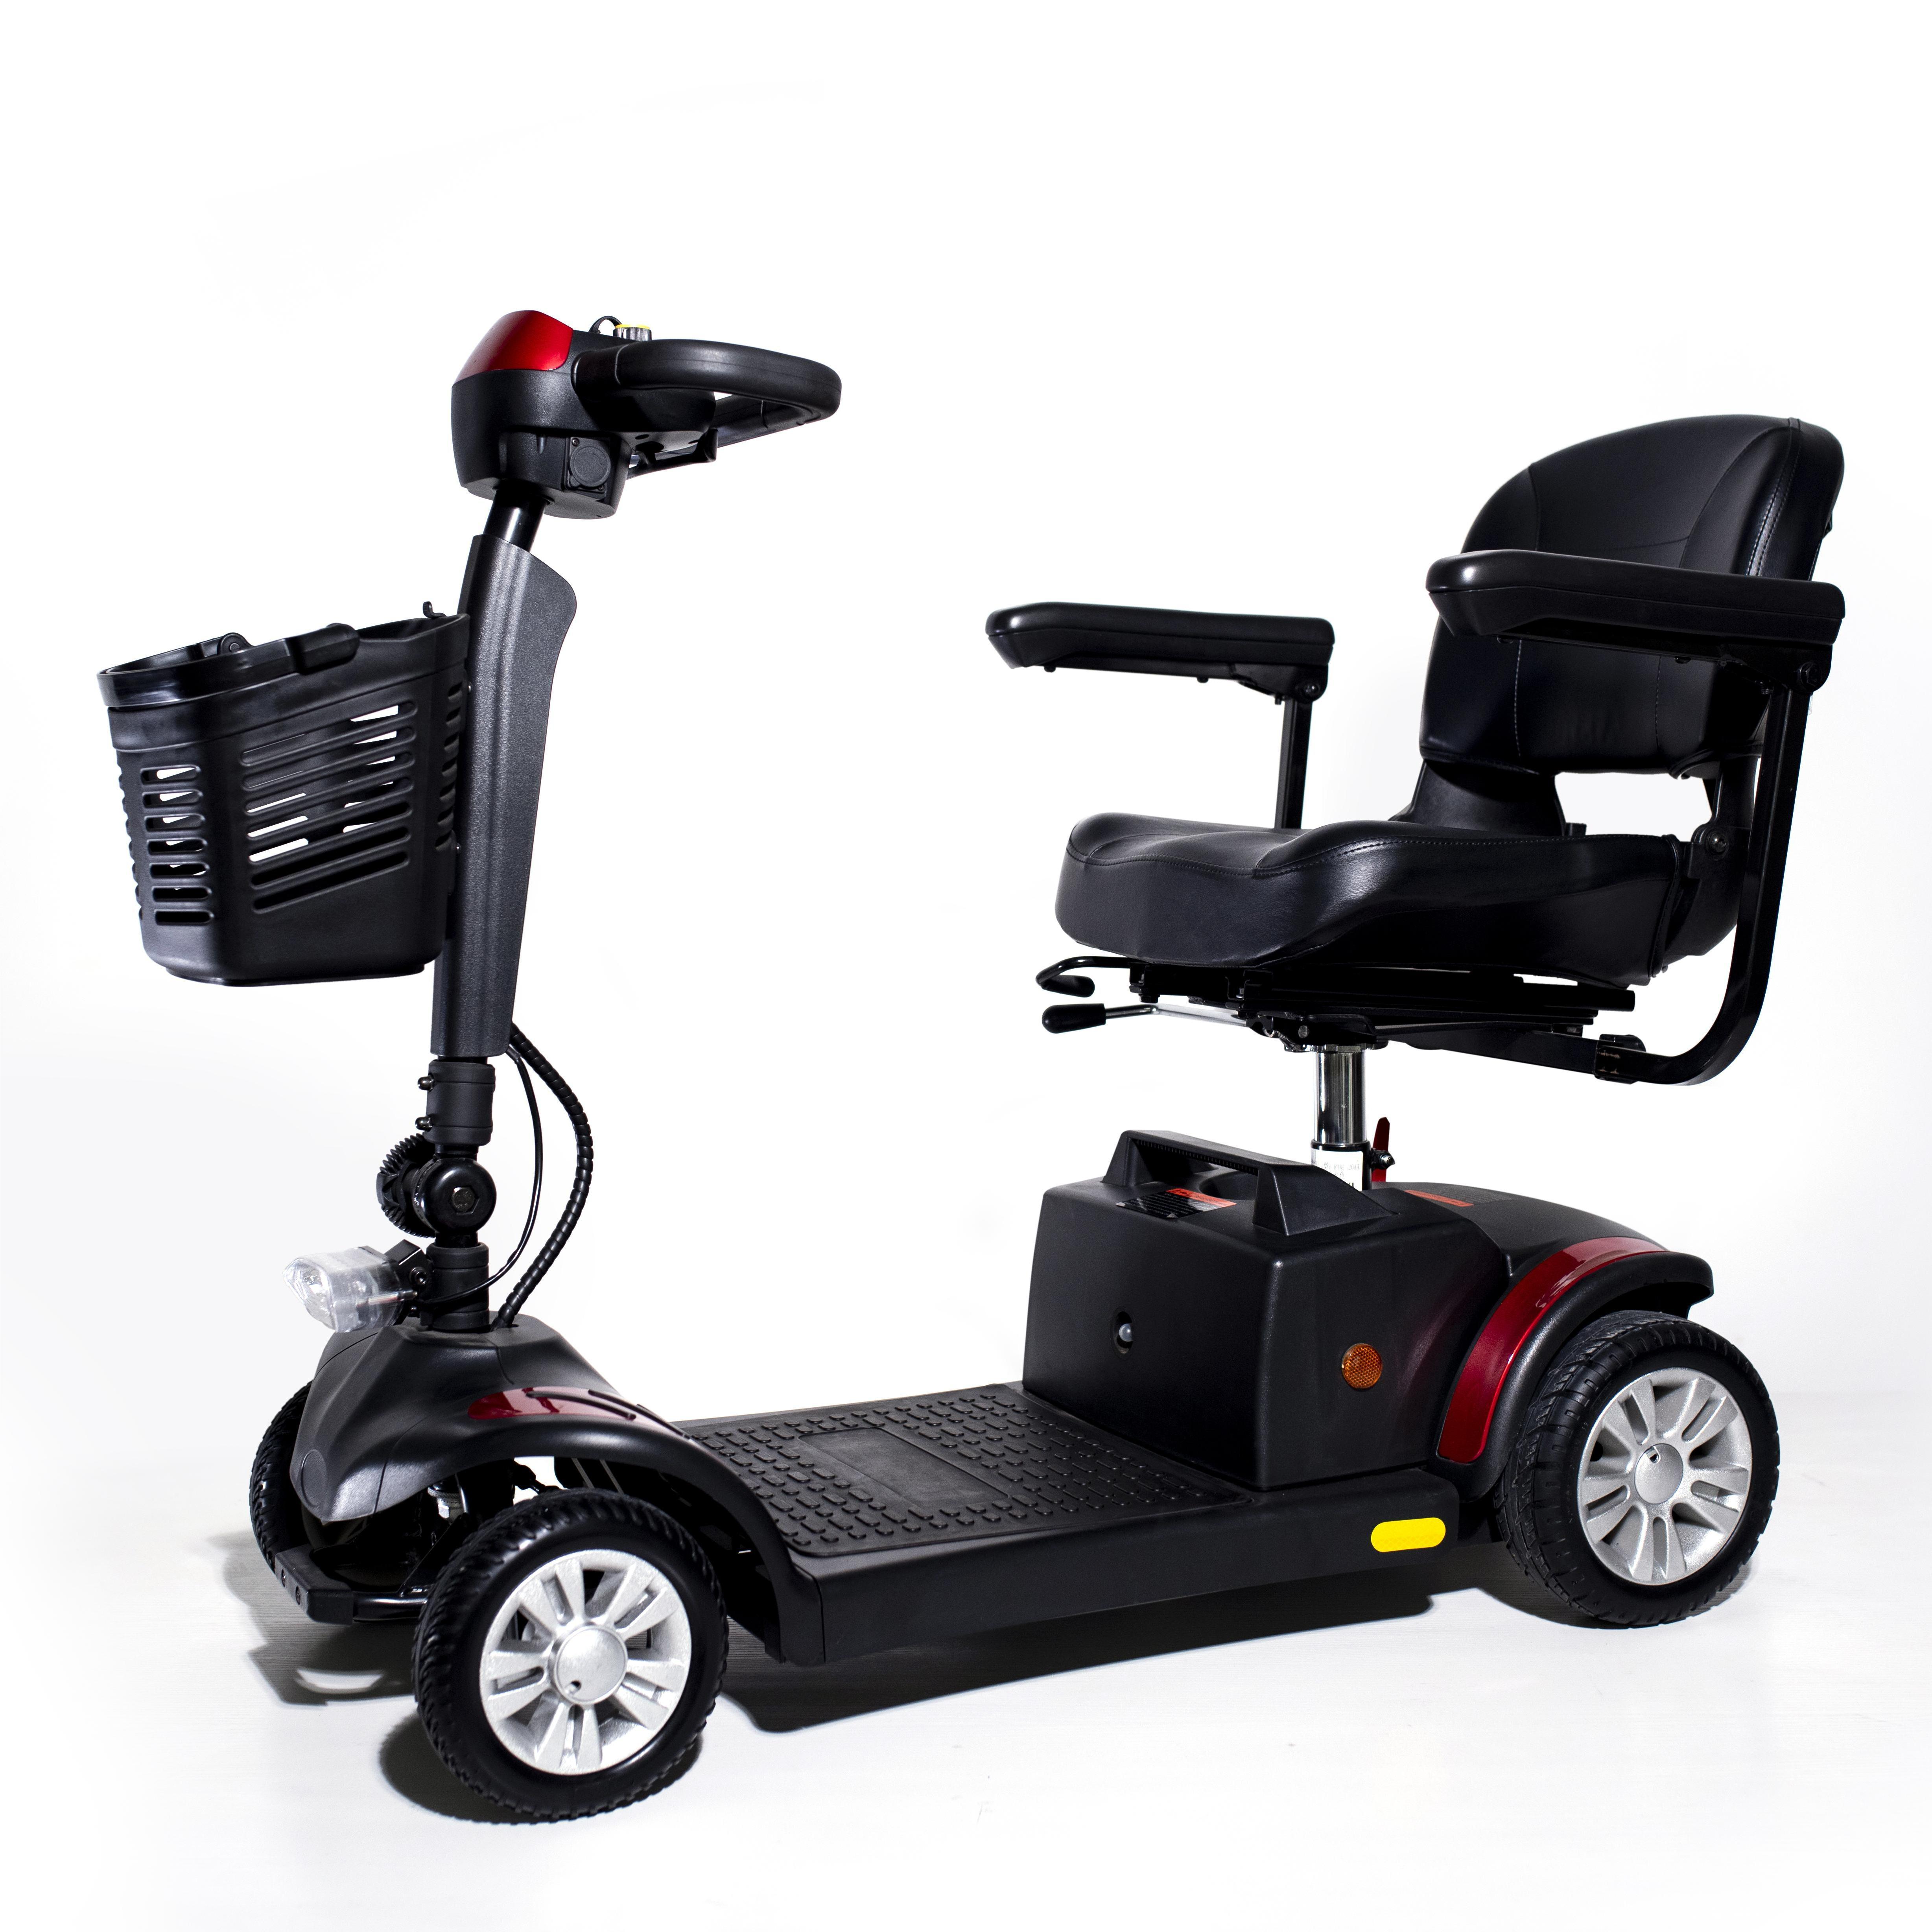 Jiangte 4 wheels ሊፈታ የሚችል CE ተንቀሳቃሽነት ስኩተር R103-20AH ለአረጋውያን